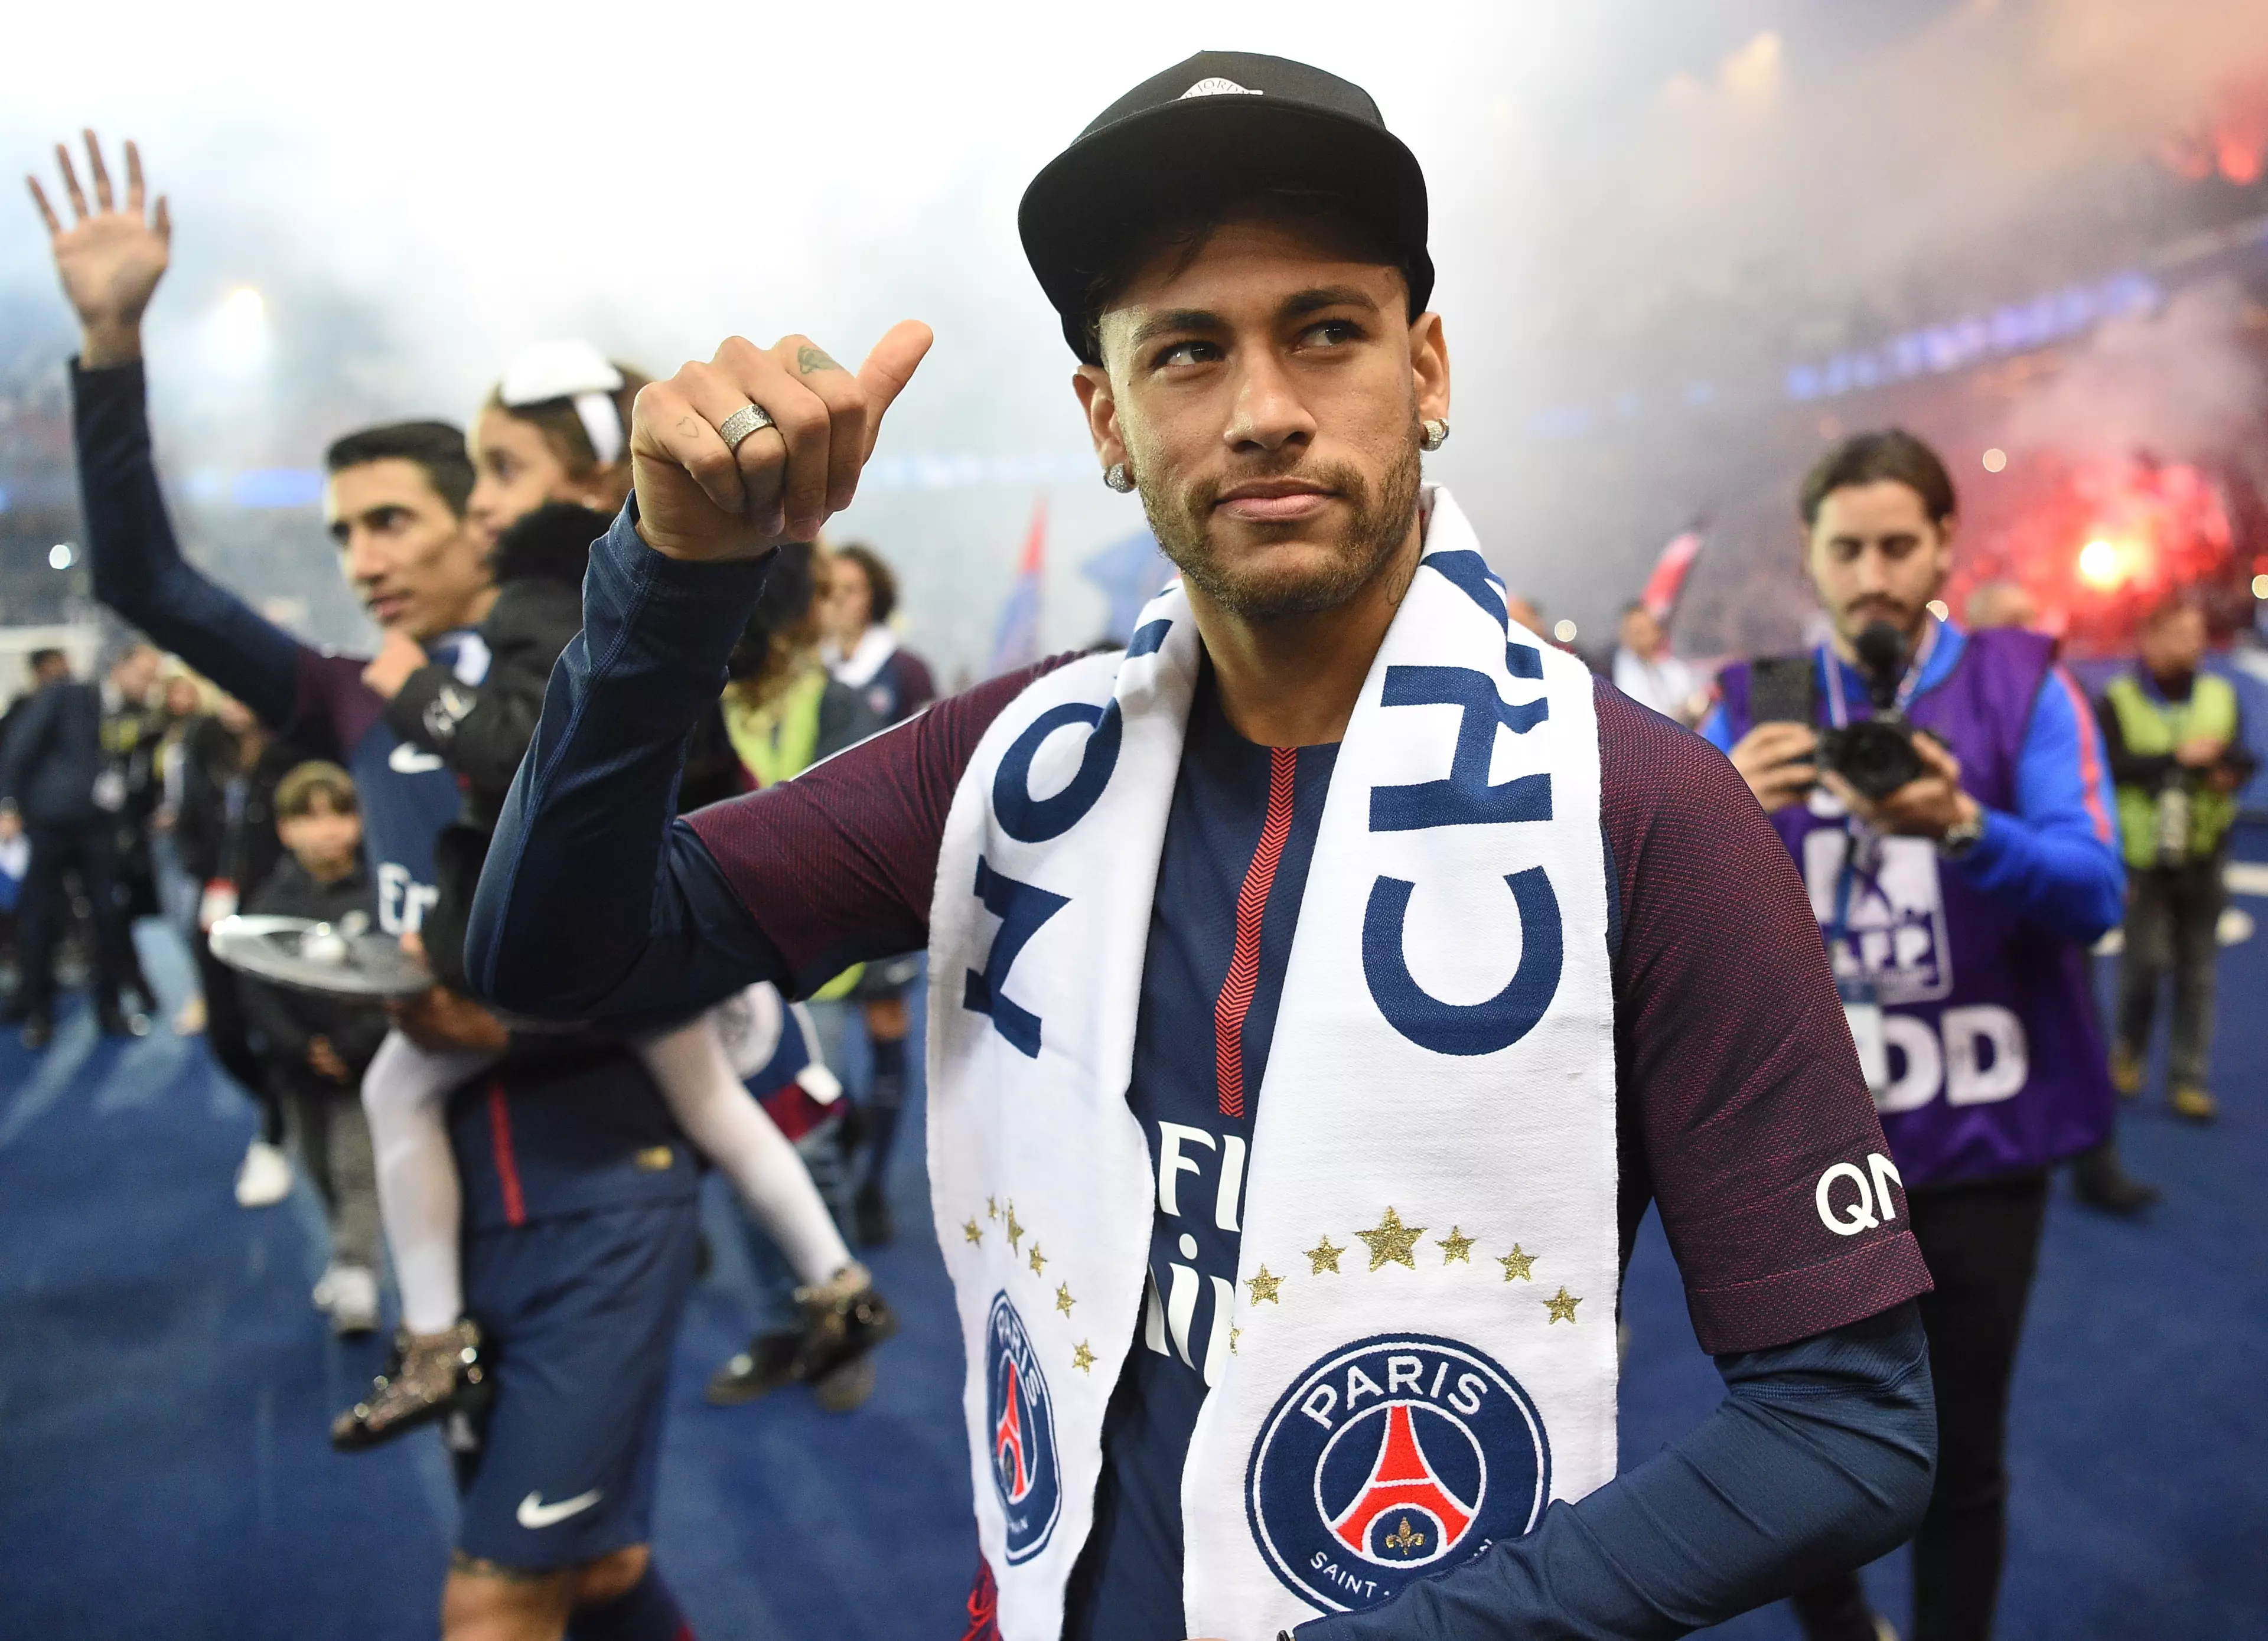 Neymar celebrates after winning the league title. Image: PA